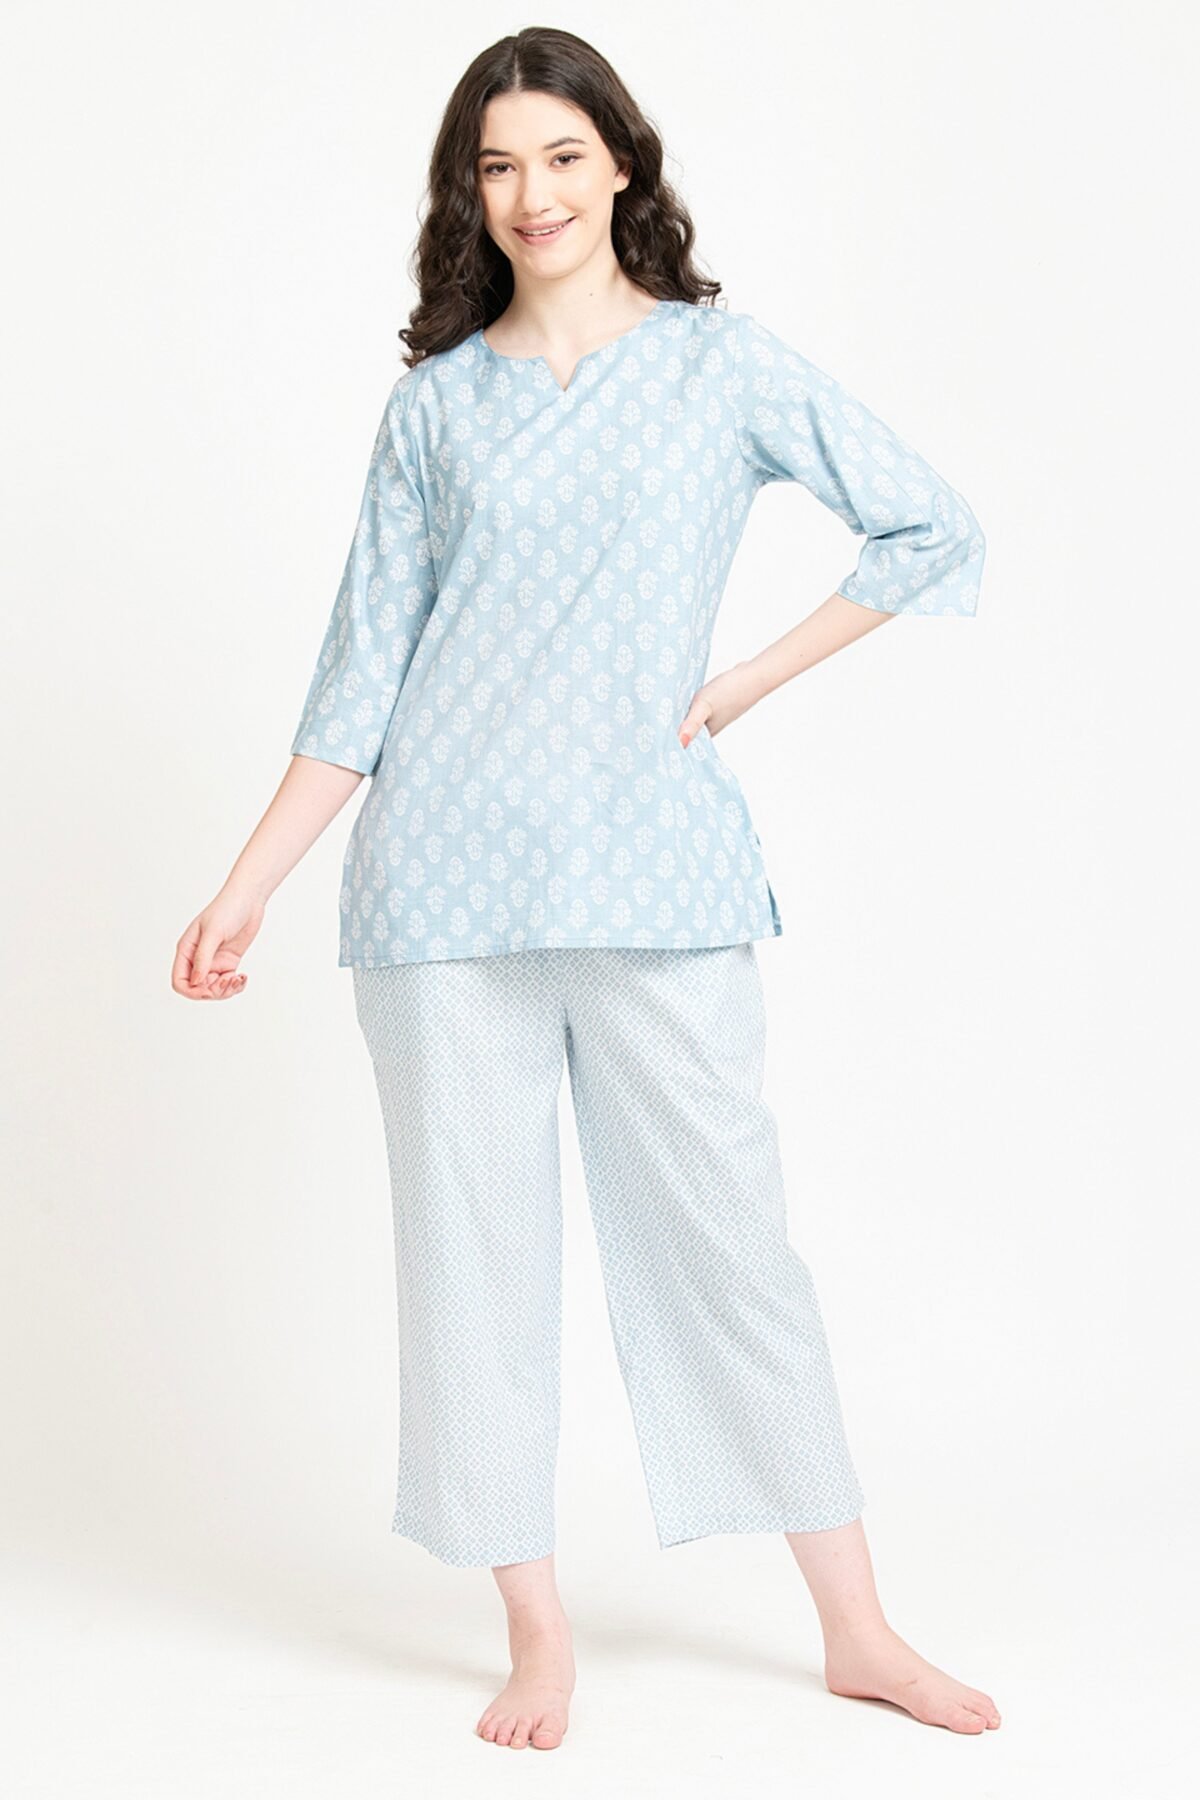 Women's Ice Blue and White Pajama set